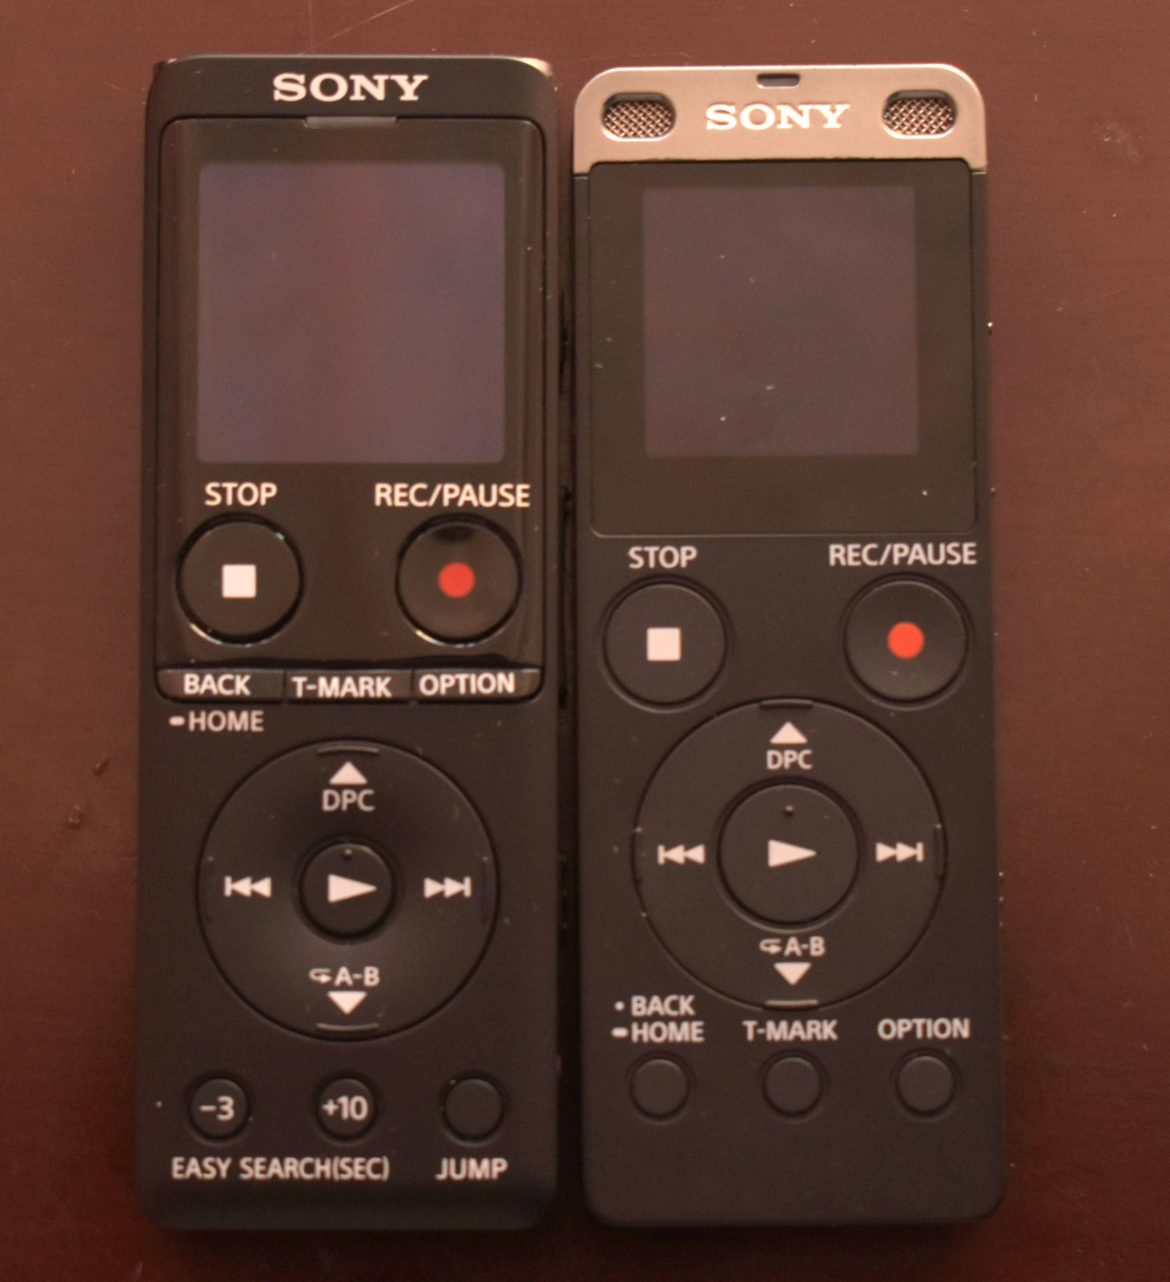 Sony ICD-UX560 vs Sony ICD-UX570